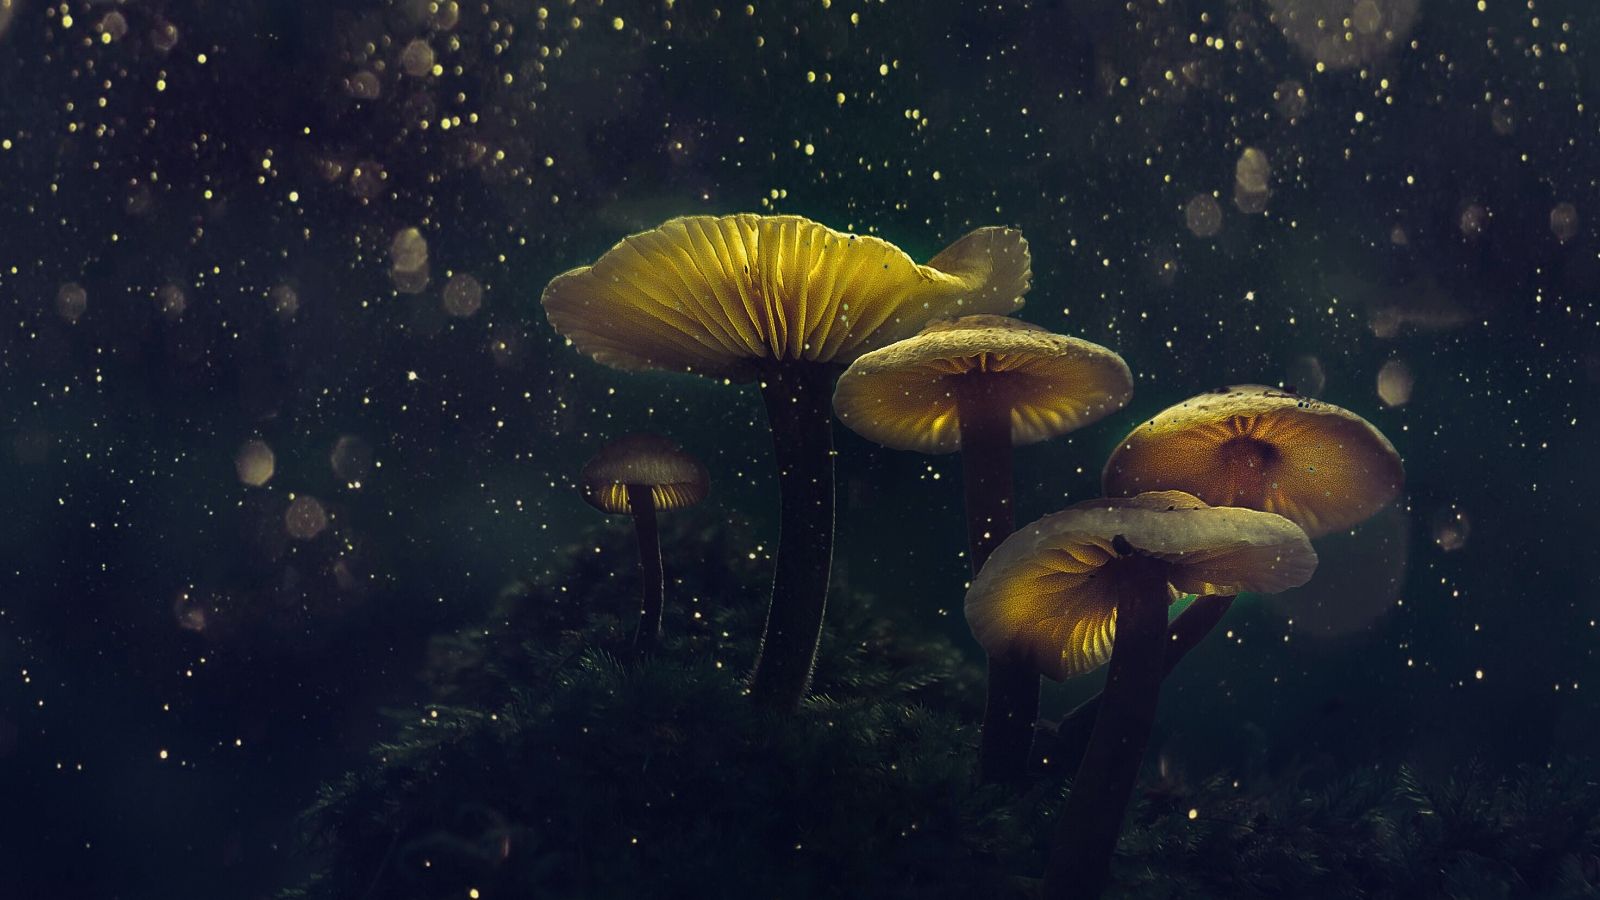 Luminescent magic mushrooms against a starry sky.